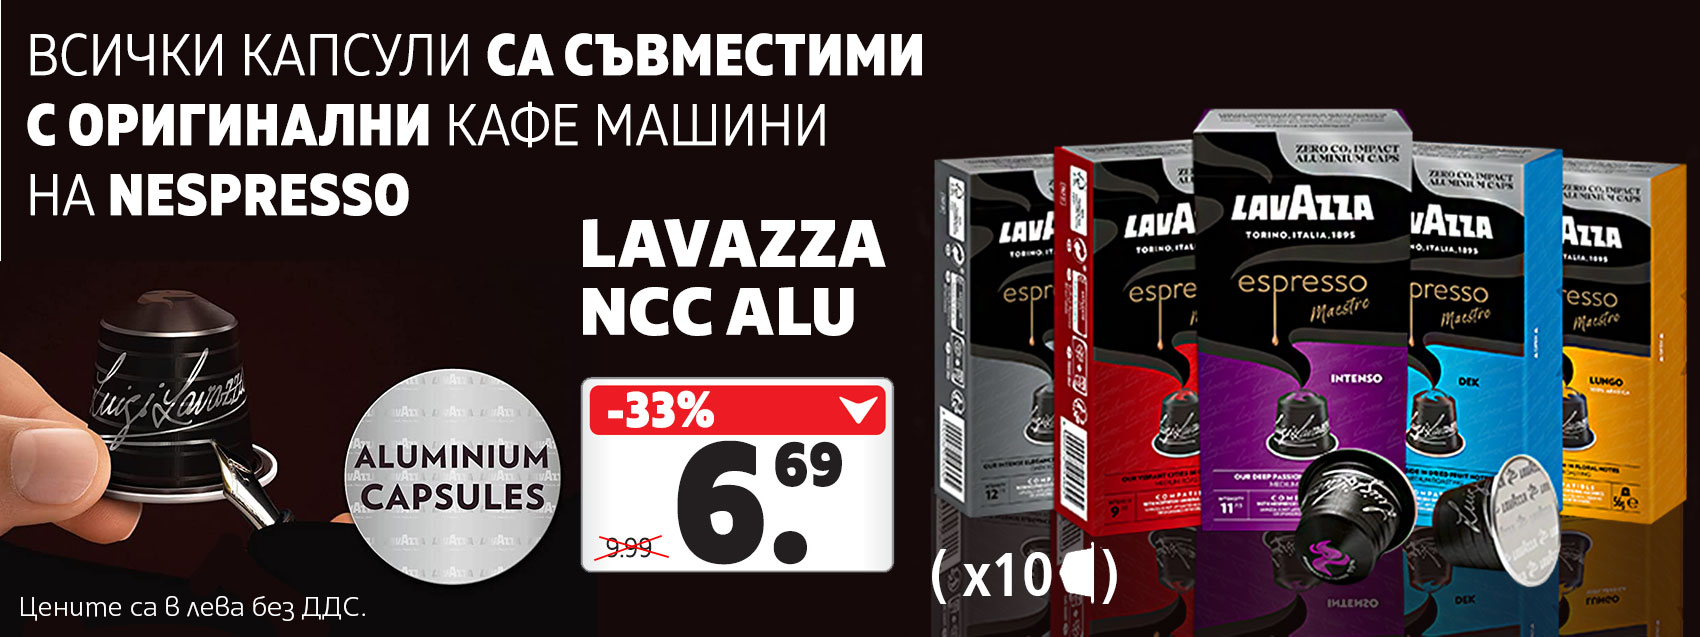 Lavazza съвместими капсули nespresso